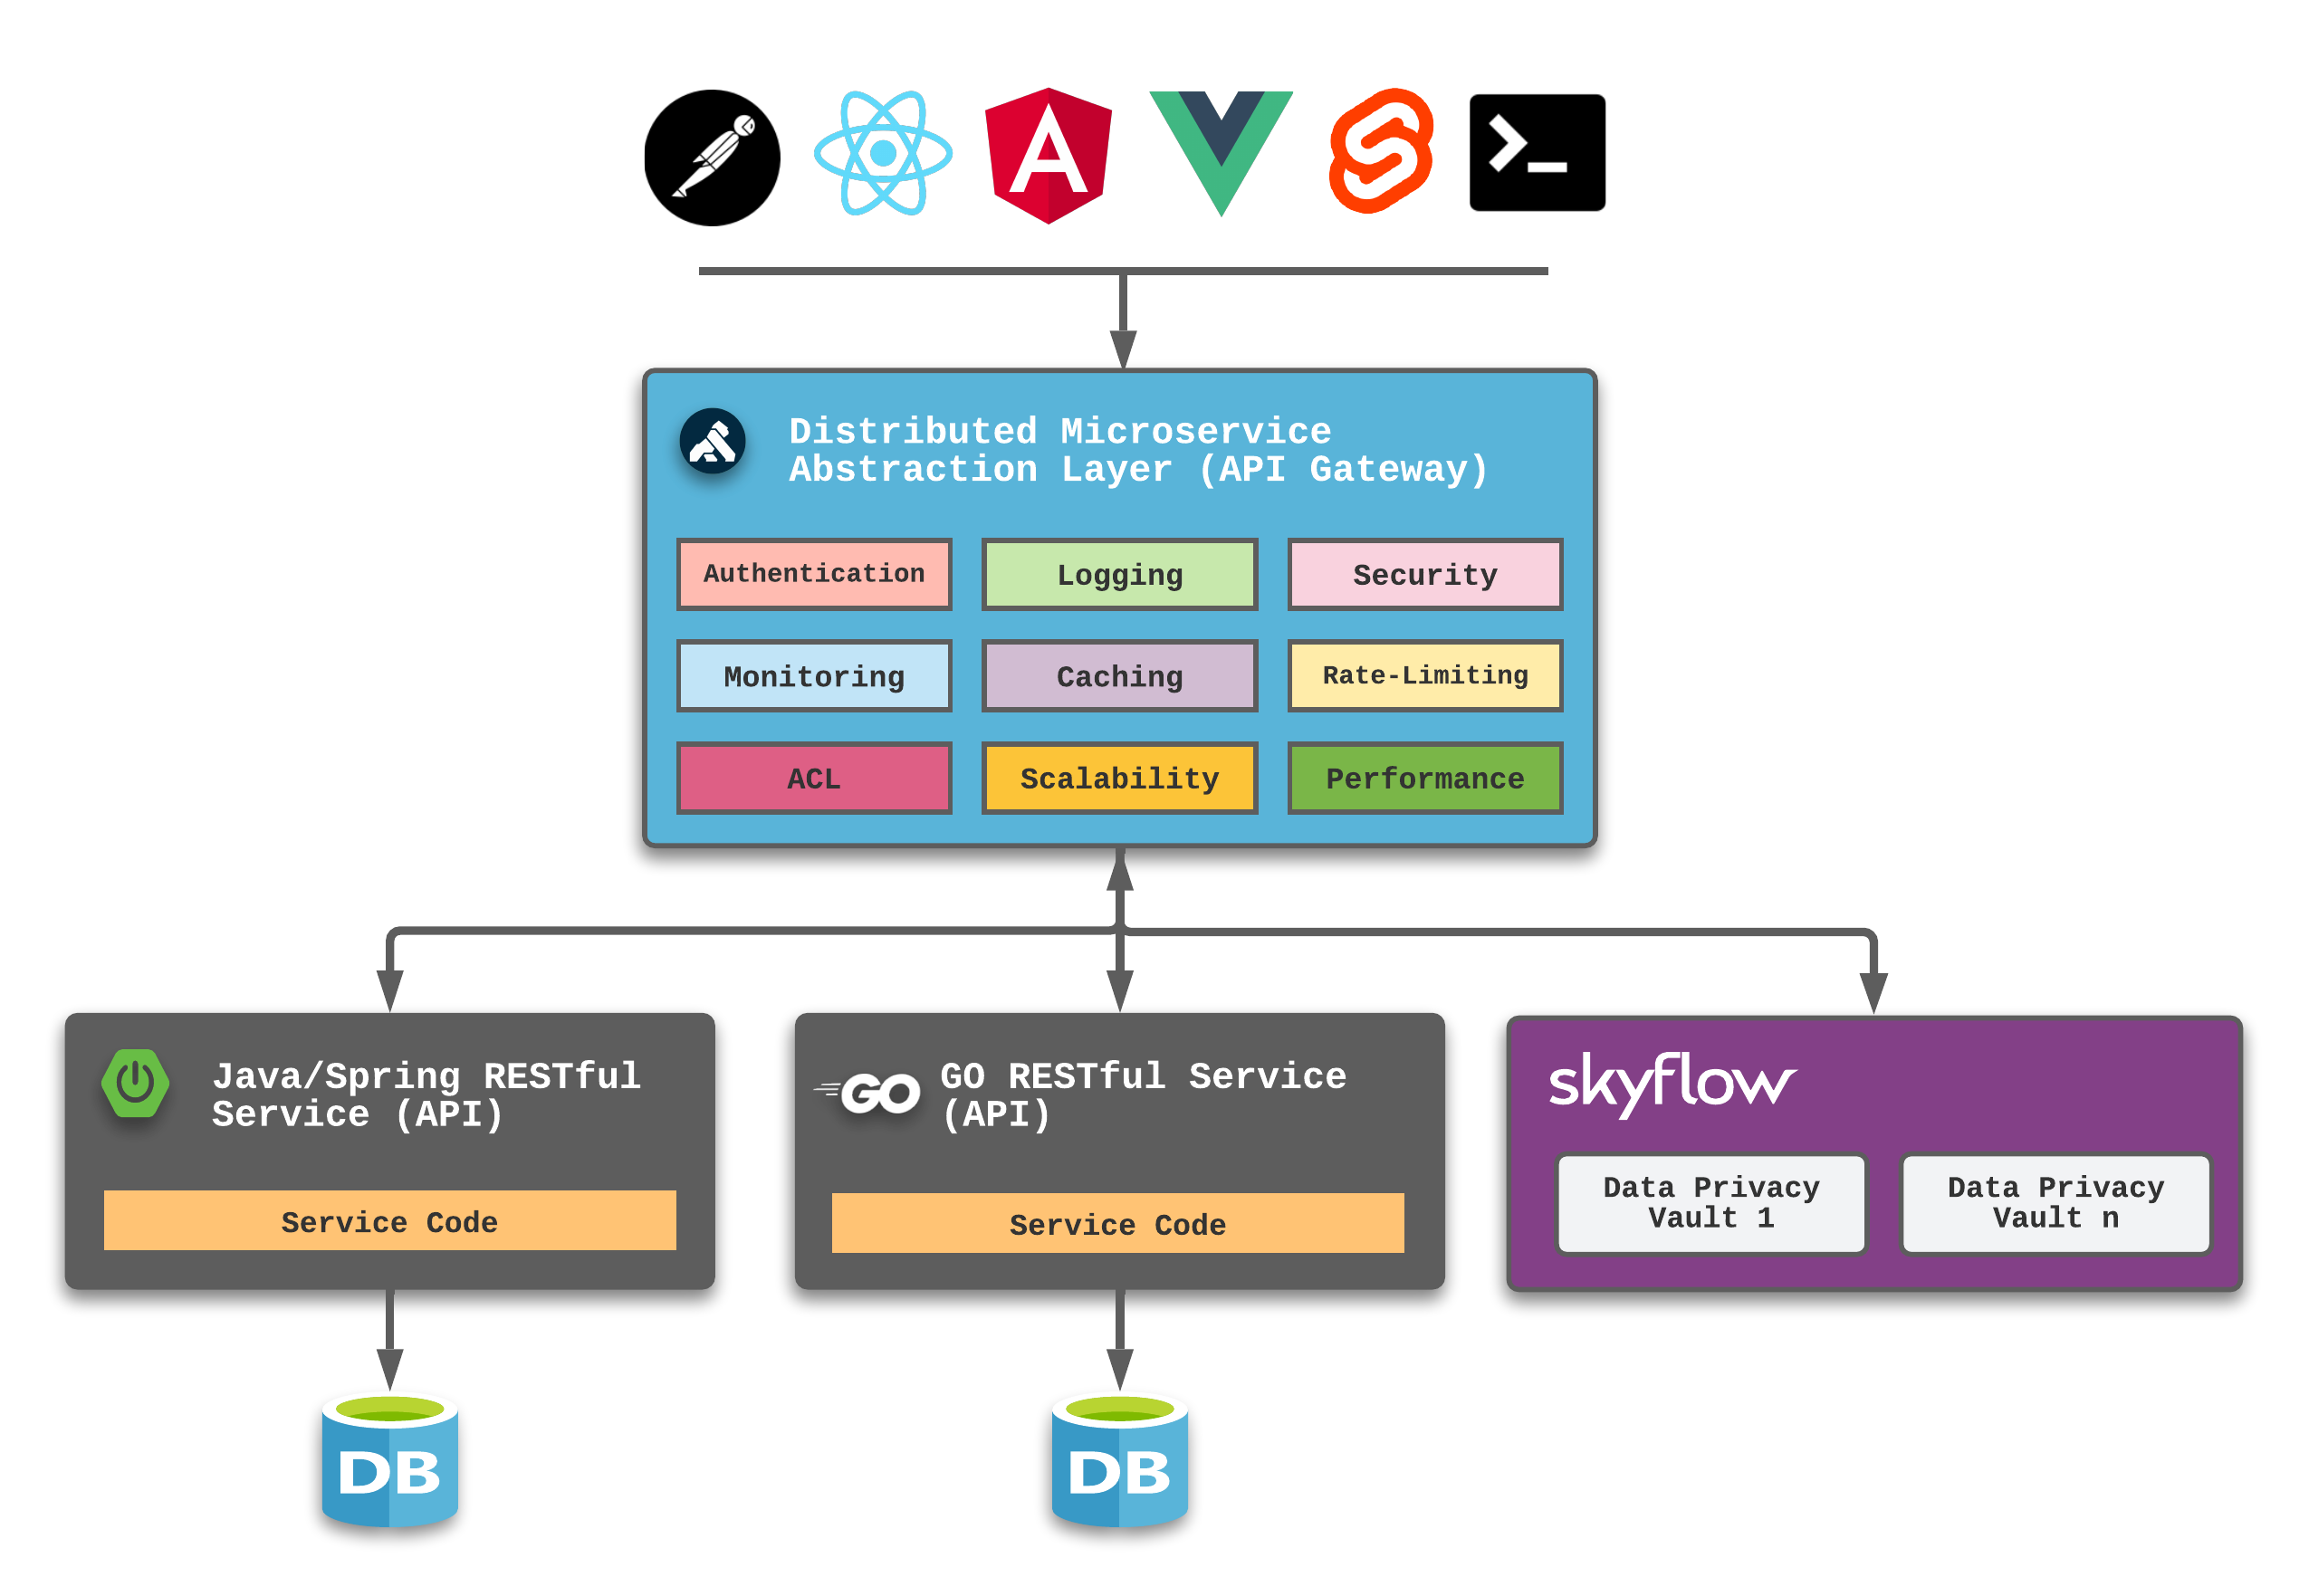 Skyflow Services